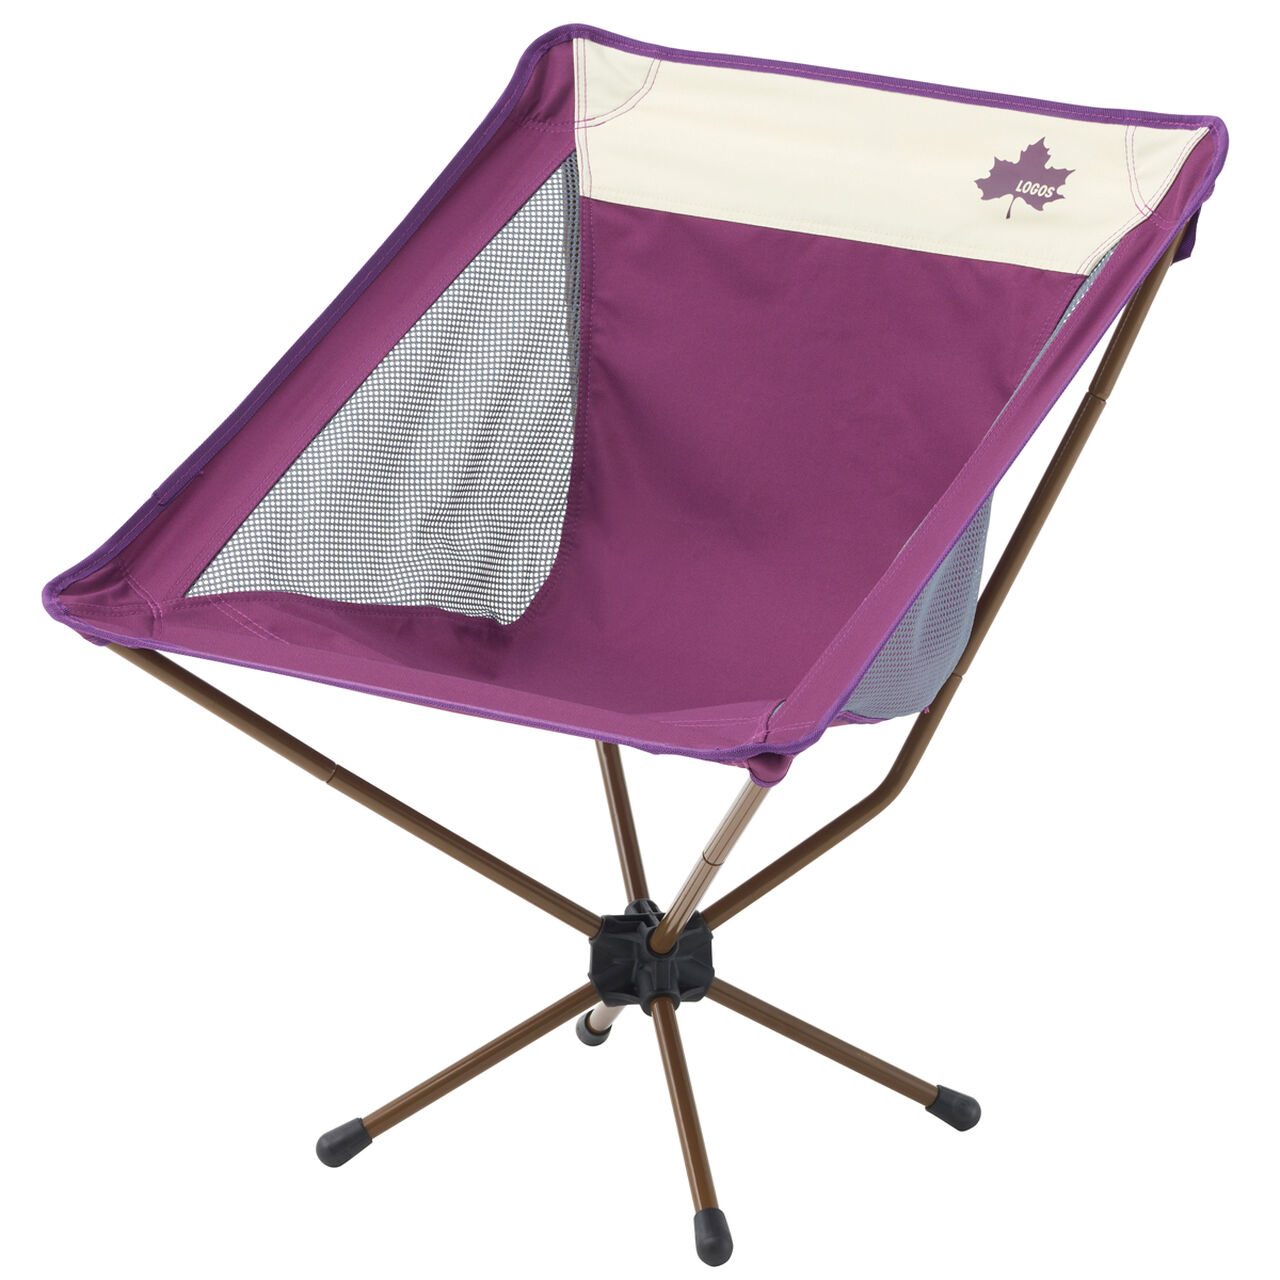 LOGOS Life Bucket Chair (Colorful Logos),Purple, large image number 3